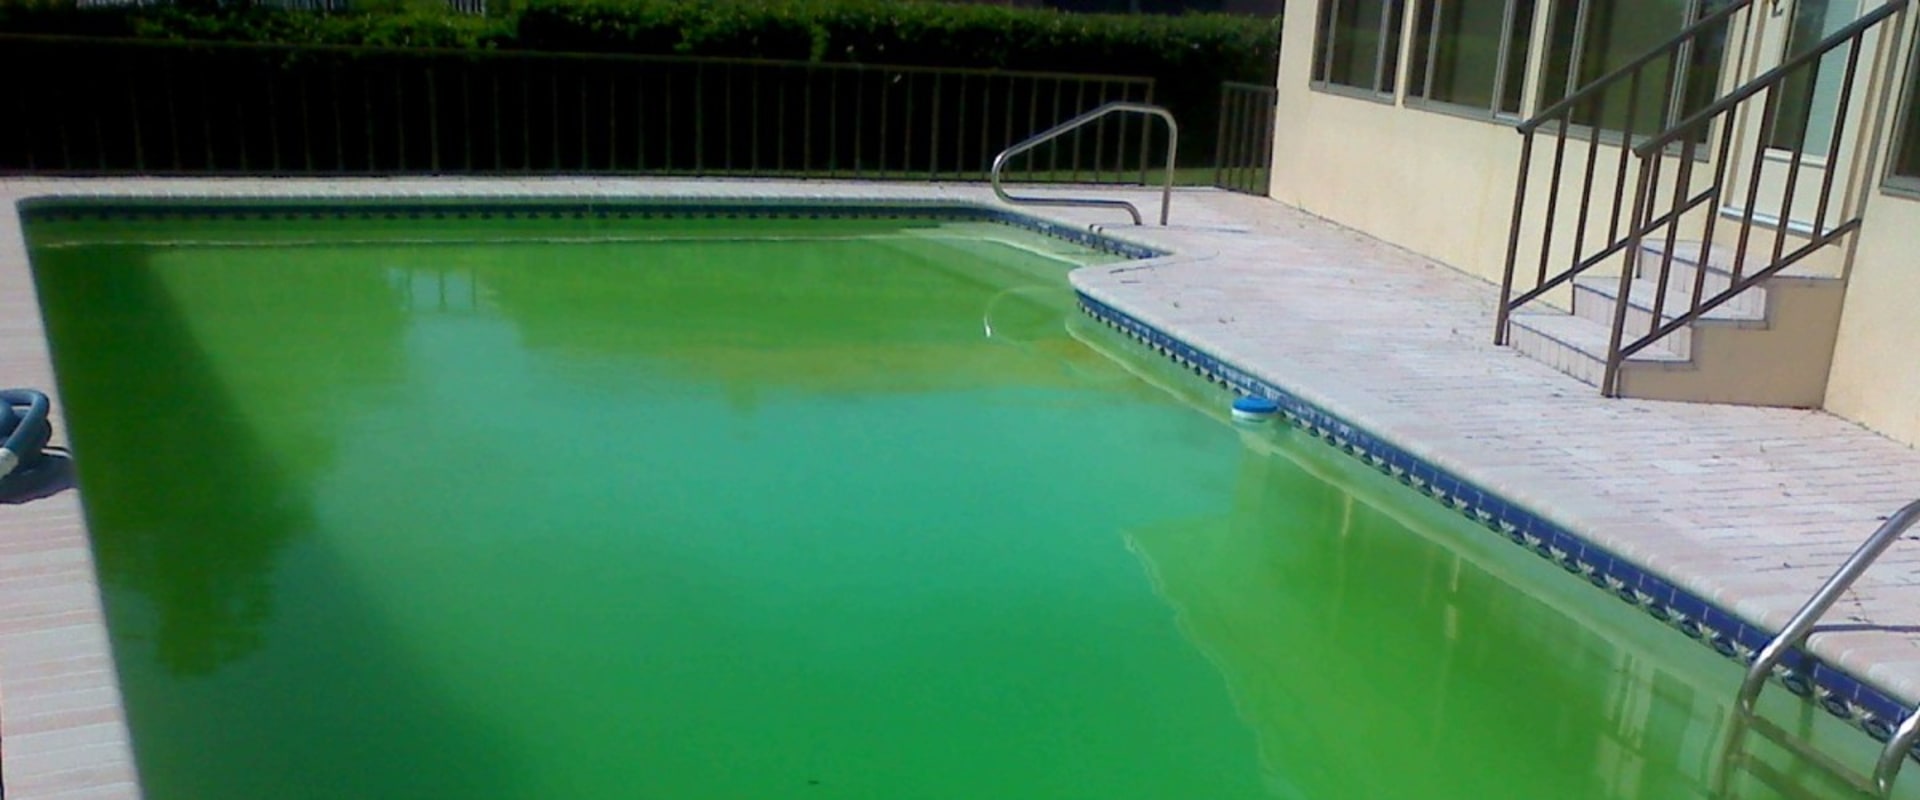 Troubleshooting Algae Issues in Swimming Pools